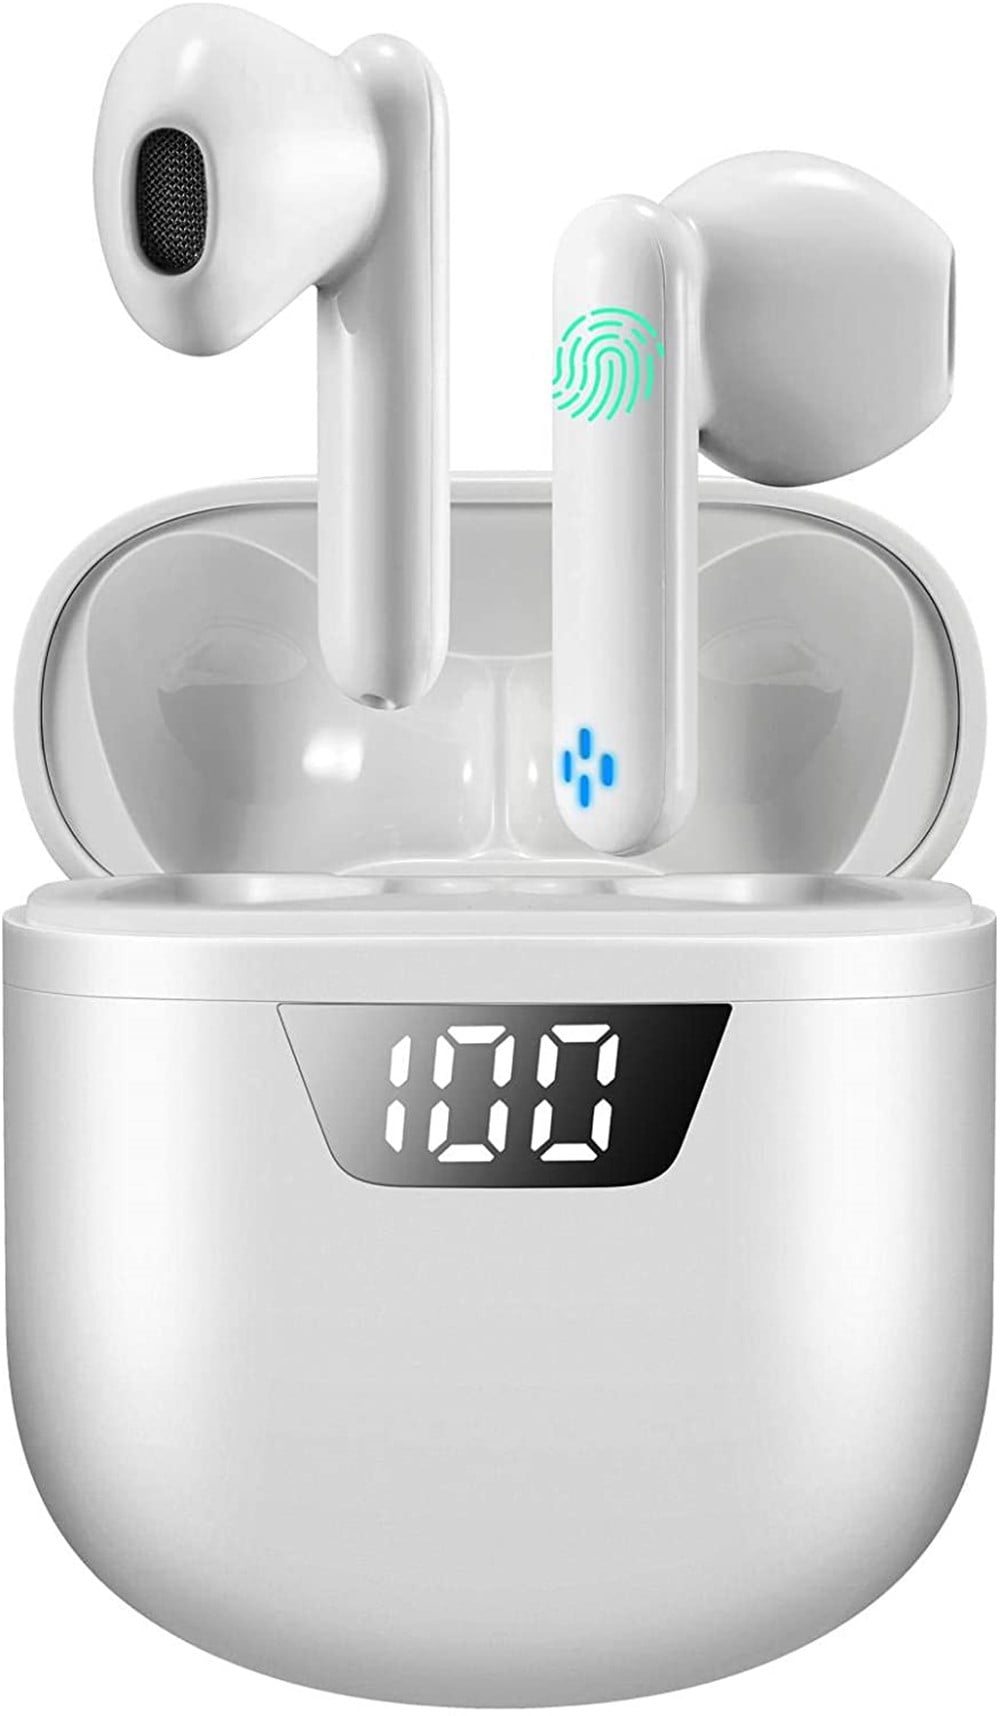 Bluetooth Kopfhörer,Bluetooth Headsets Wireless Headsets,in Ear Bluetooth 5.0 Headset Stereo-Minikopfhörer Sport Kabellose Kopfhörer Mikrofon für Apple Airpods Android iPhone/Samsung/Huawei